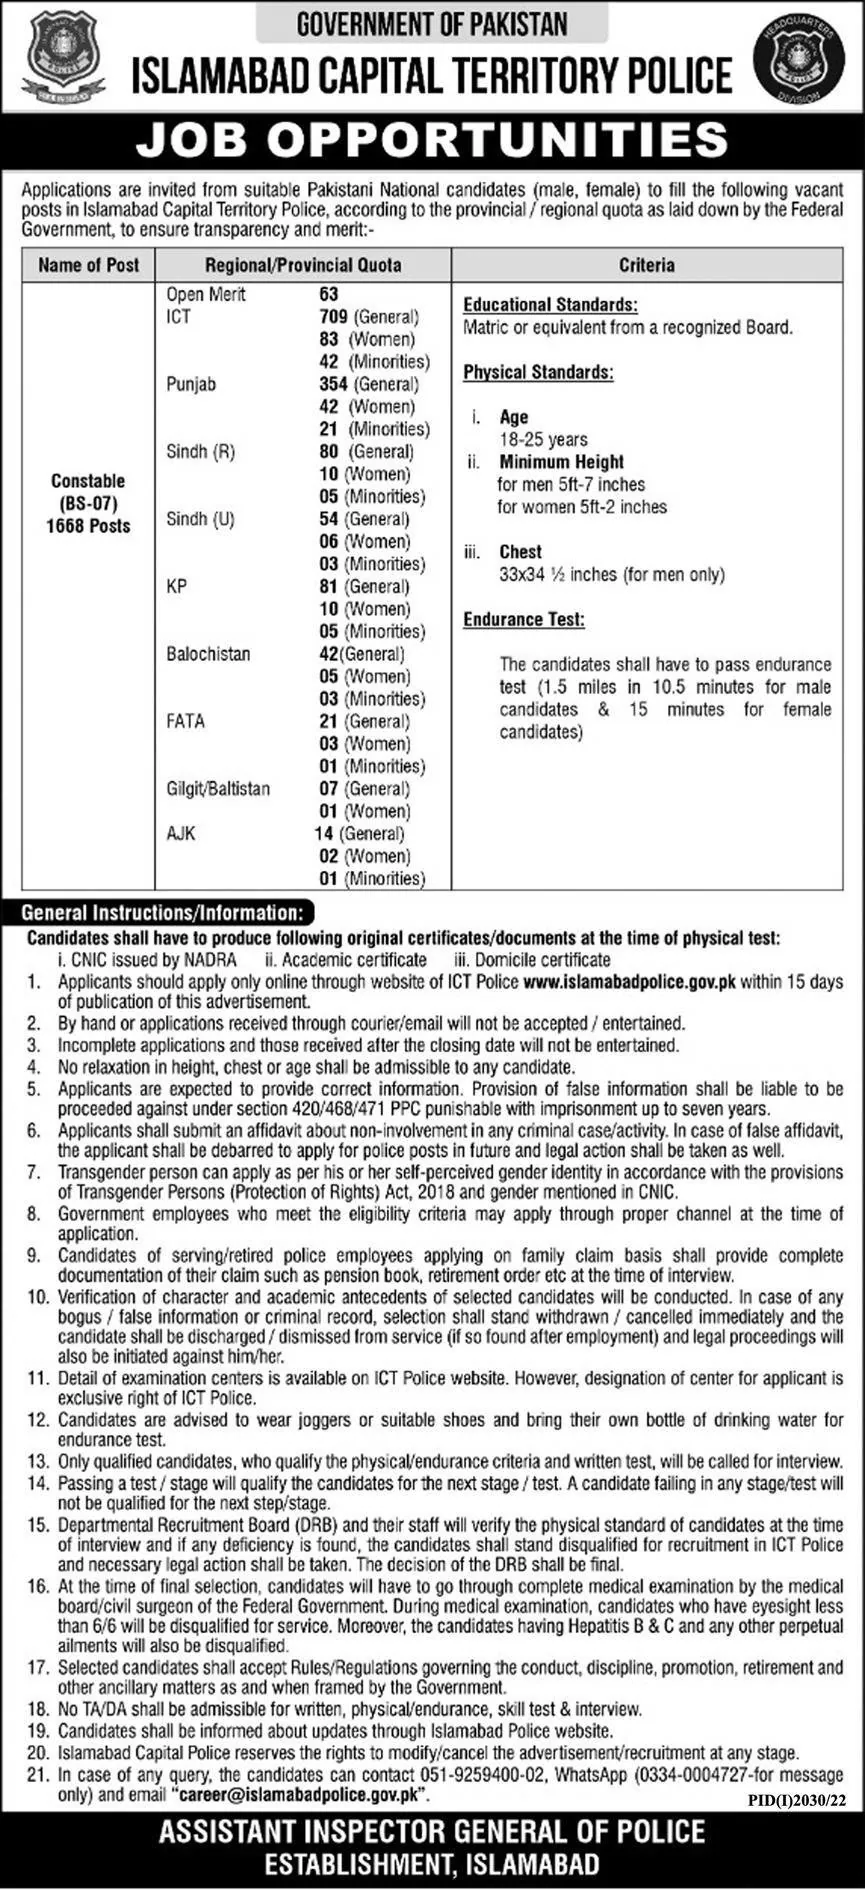 Islamabad Police Jobs 2022 Online Apply - www.islamabadpolice.gov.pk